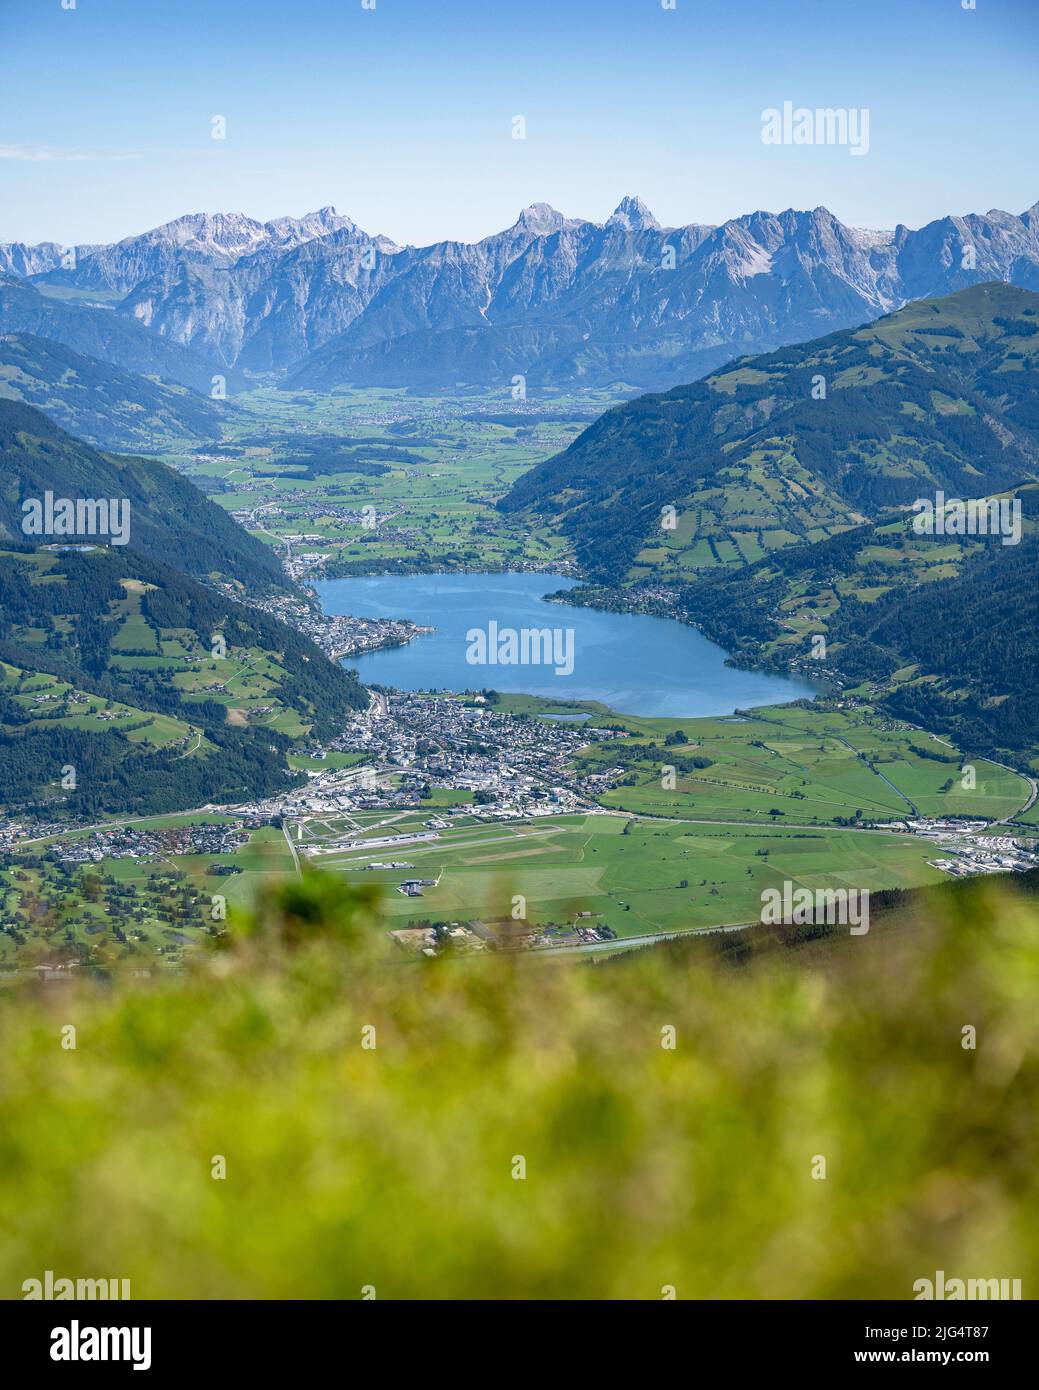 Estate in Austria, città e lago Zell am See di fronte alle Alpi Berchtesgaden, Pinzgau, Salzburger Land, Austria, Europa Foto Stock